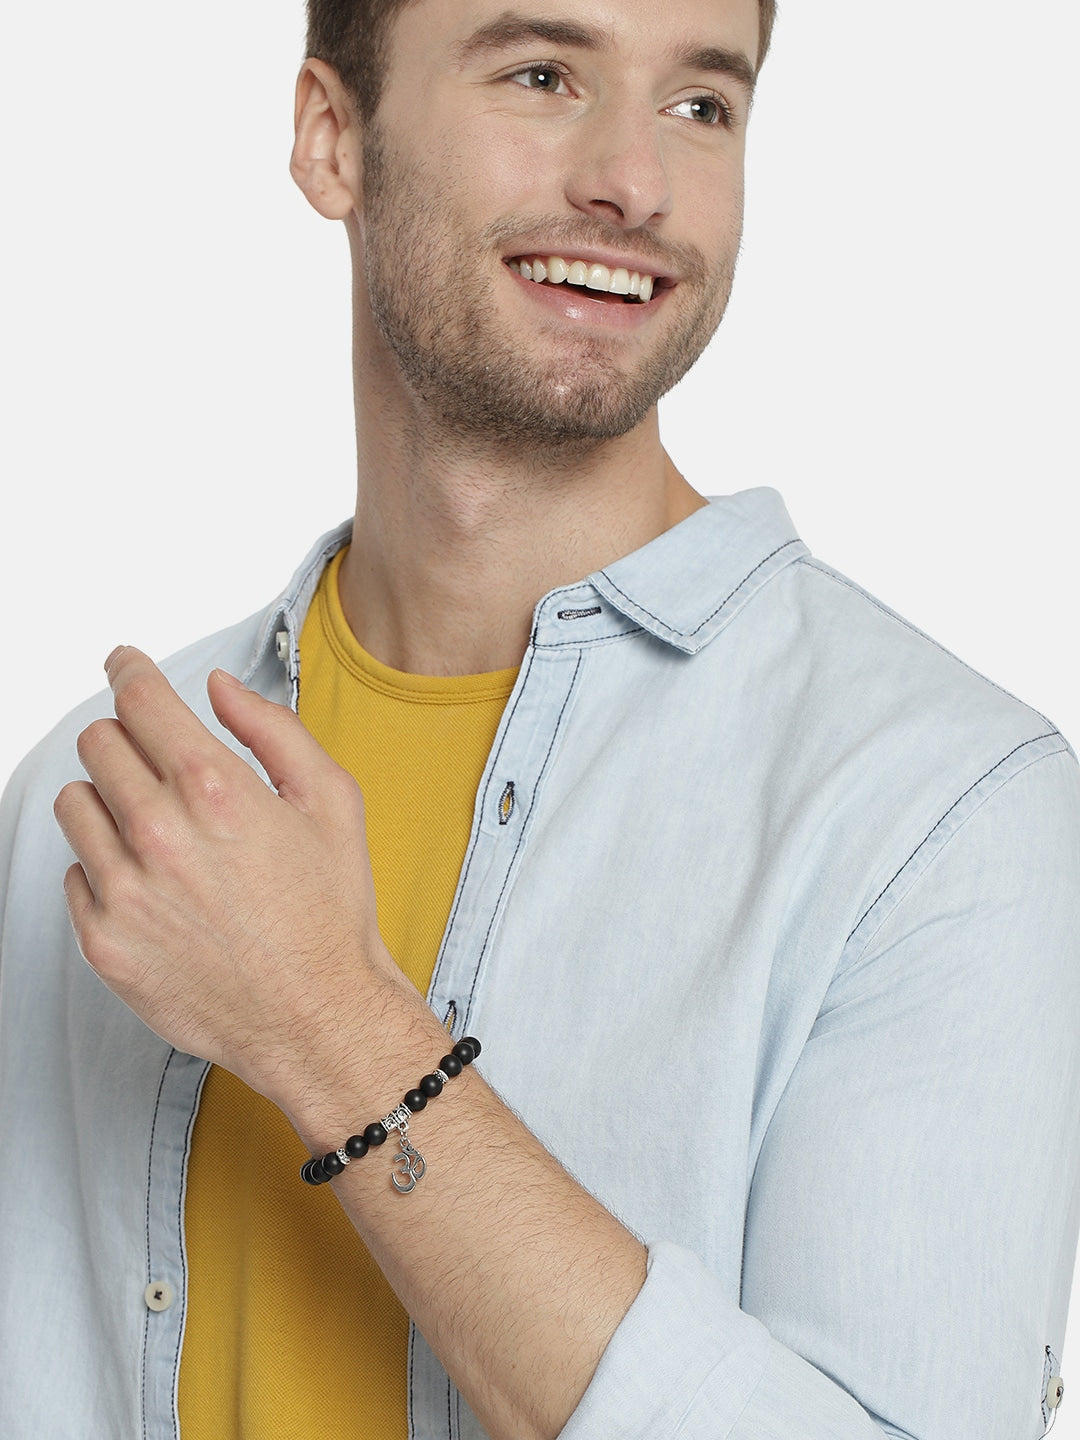 EL REGALO Men Black & Silver-Toned Handcrafted Om Elasticated Charm Bracelet - for Men
Style ID: 16186540